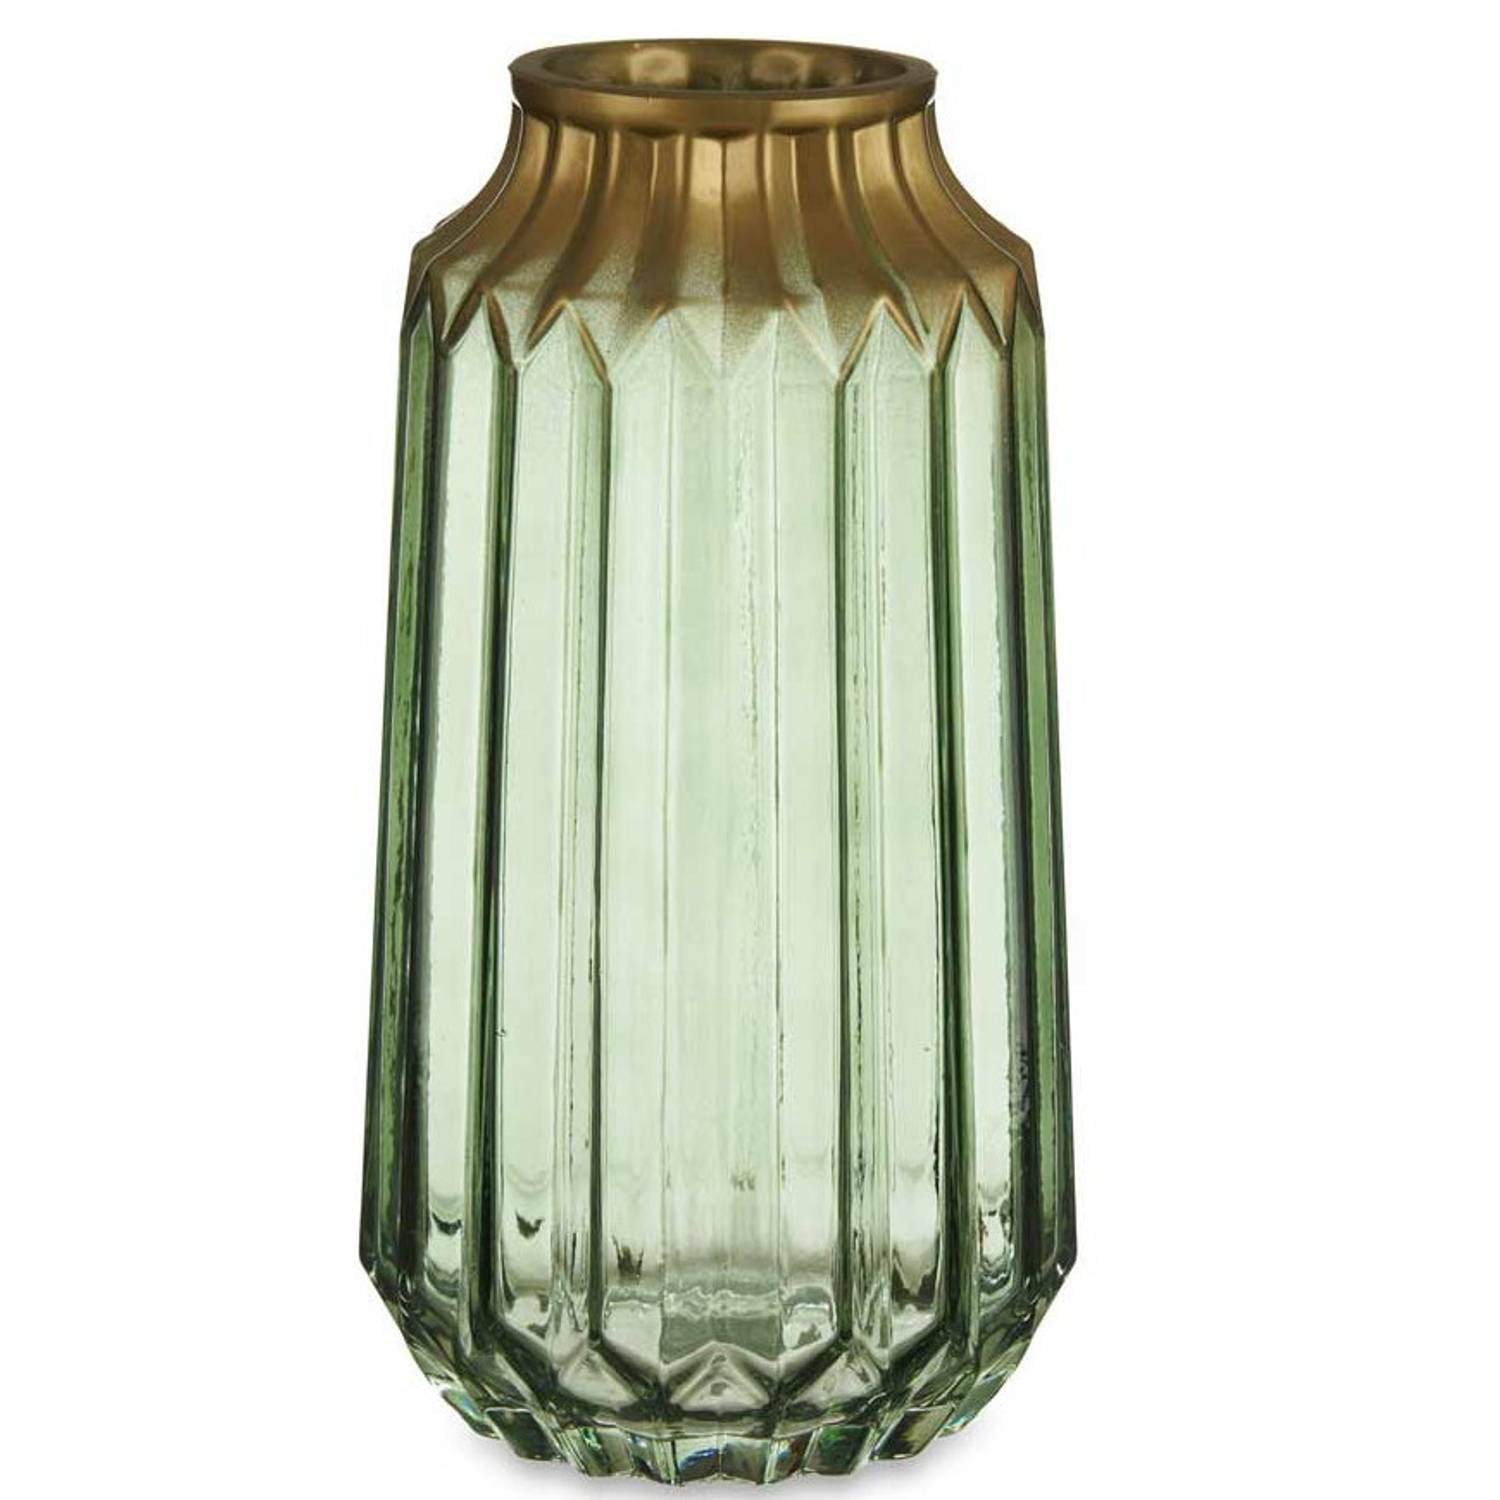 Giftdecor - Bloemenvaas - Glas - groen transparant/goud - 13 x 23 cm